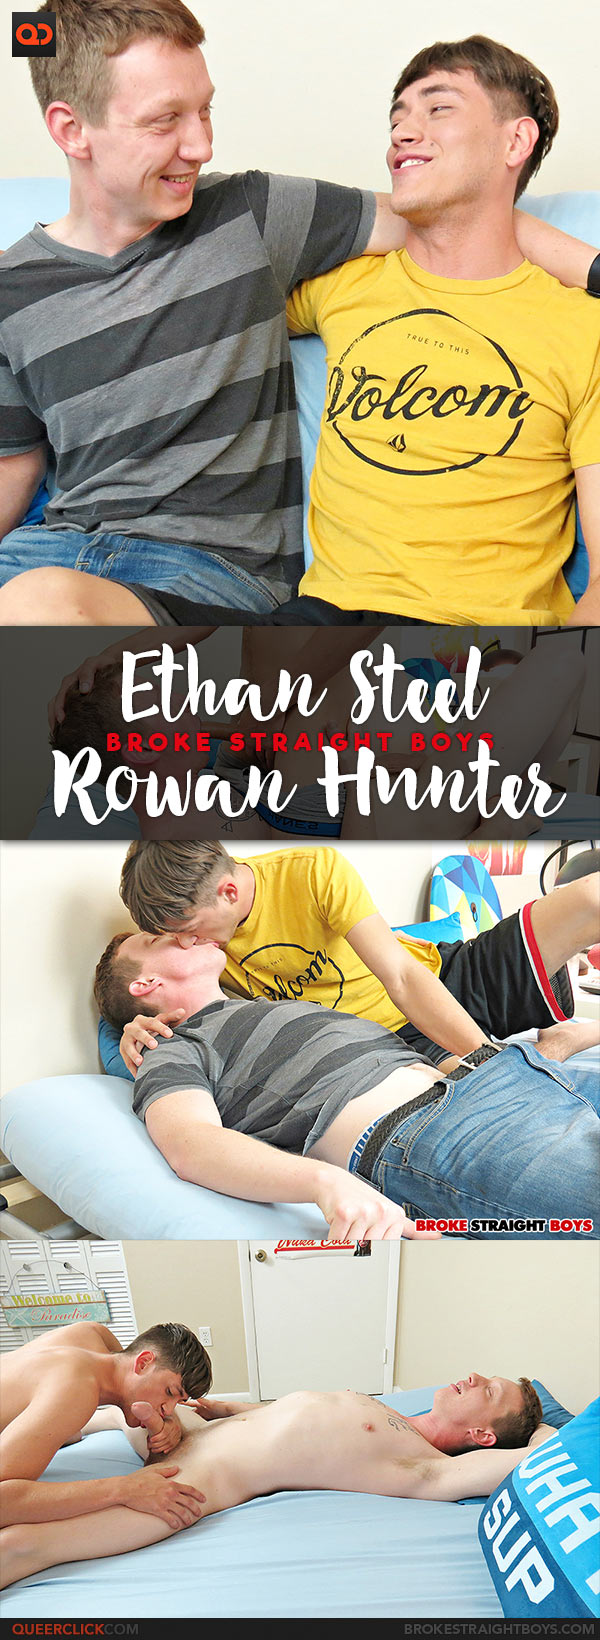 Broke Straight Boys: Ethan Steel Fucks Rowan Hunter - Bareback